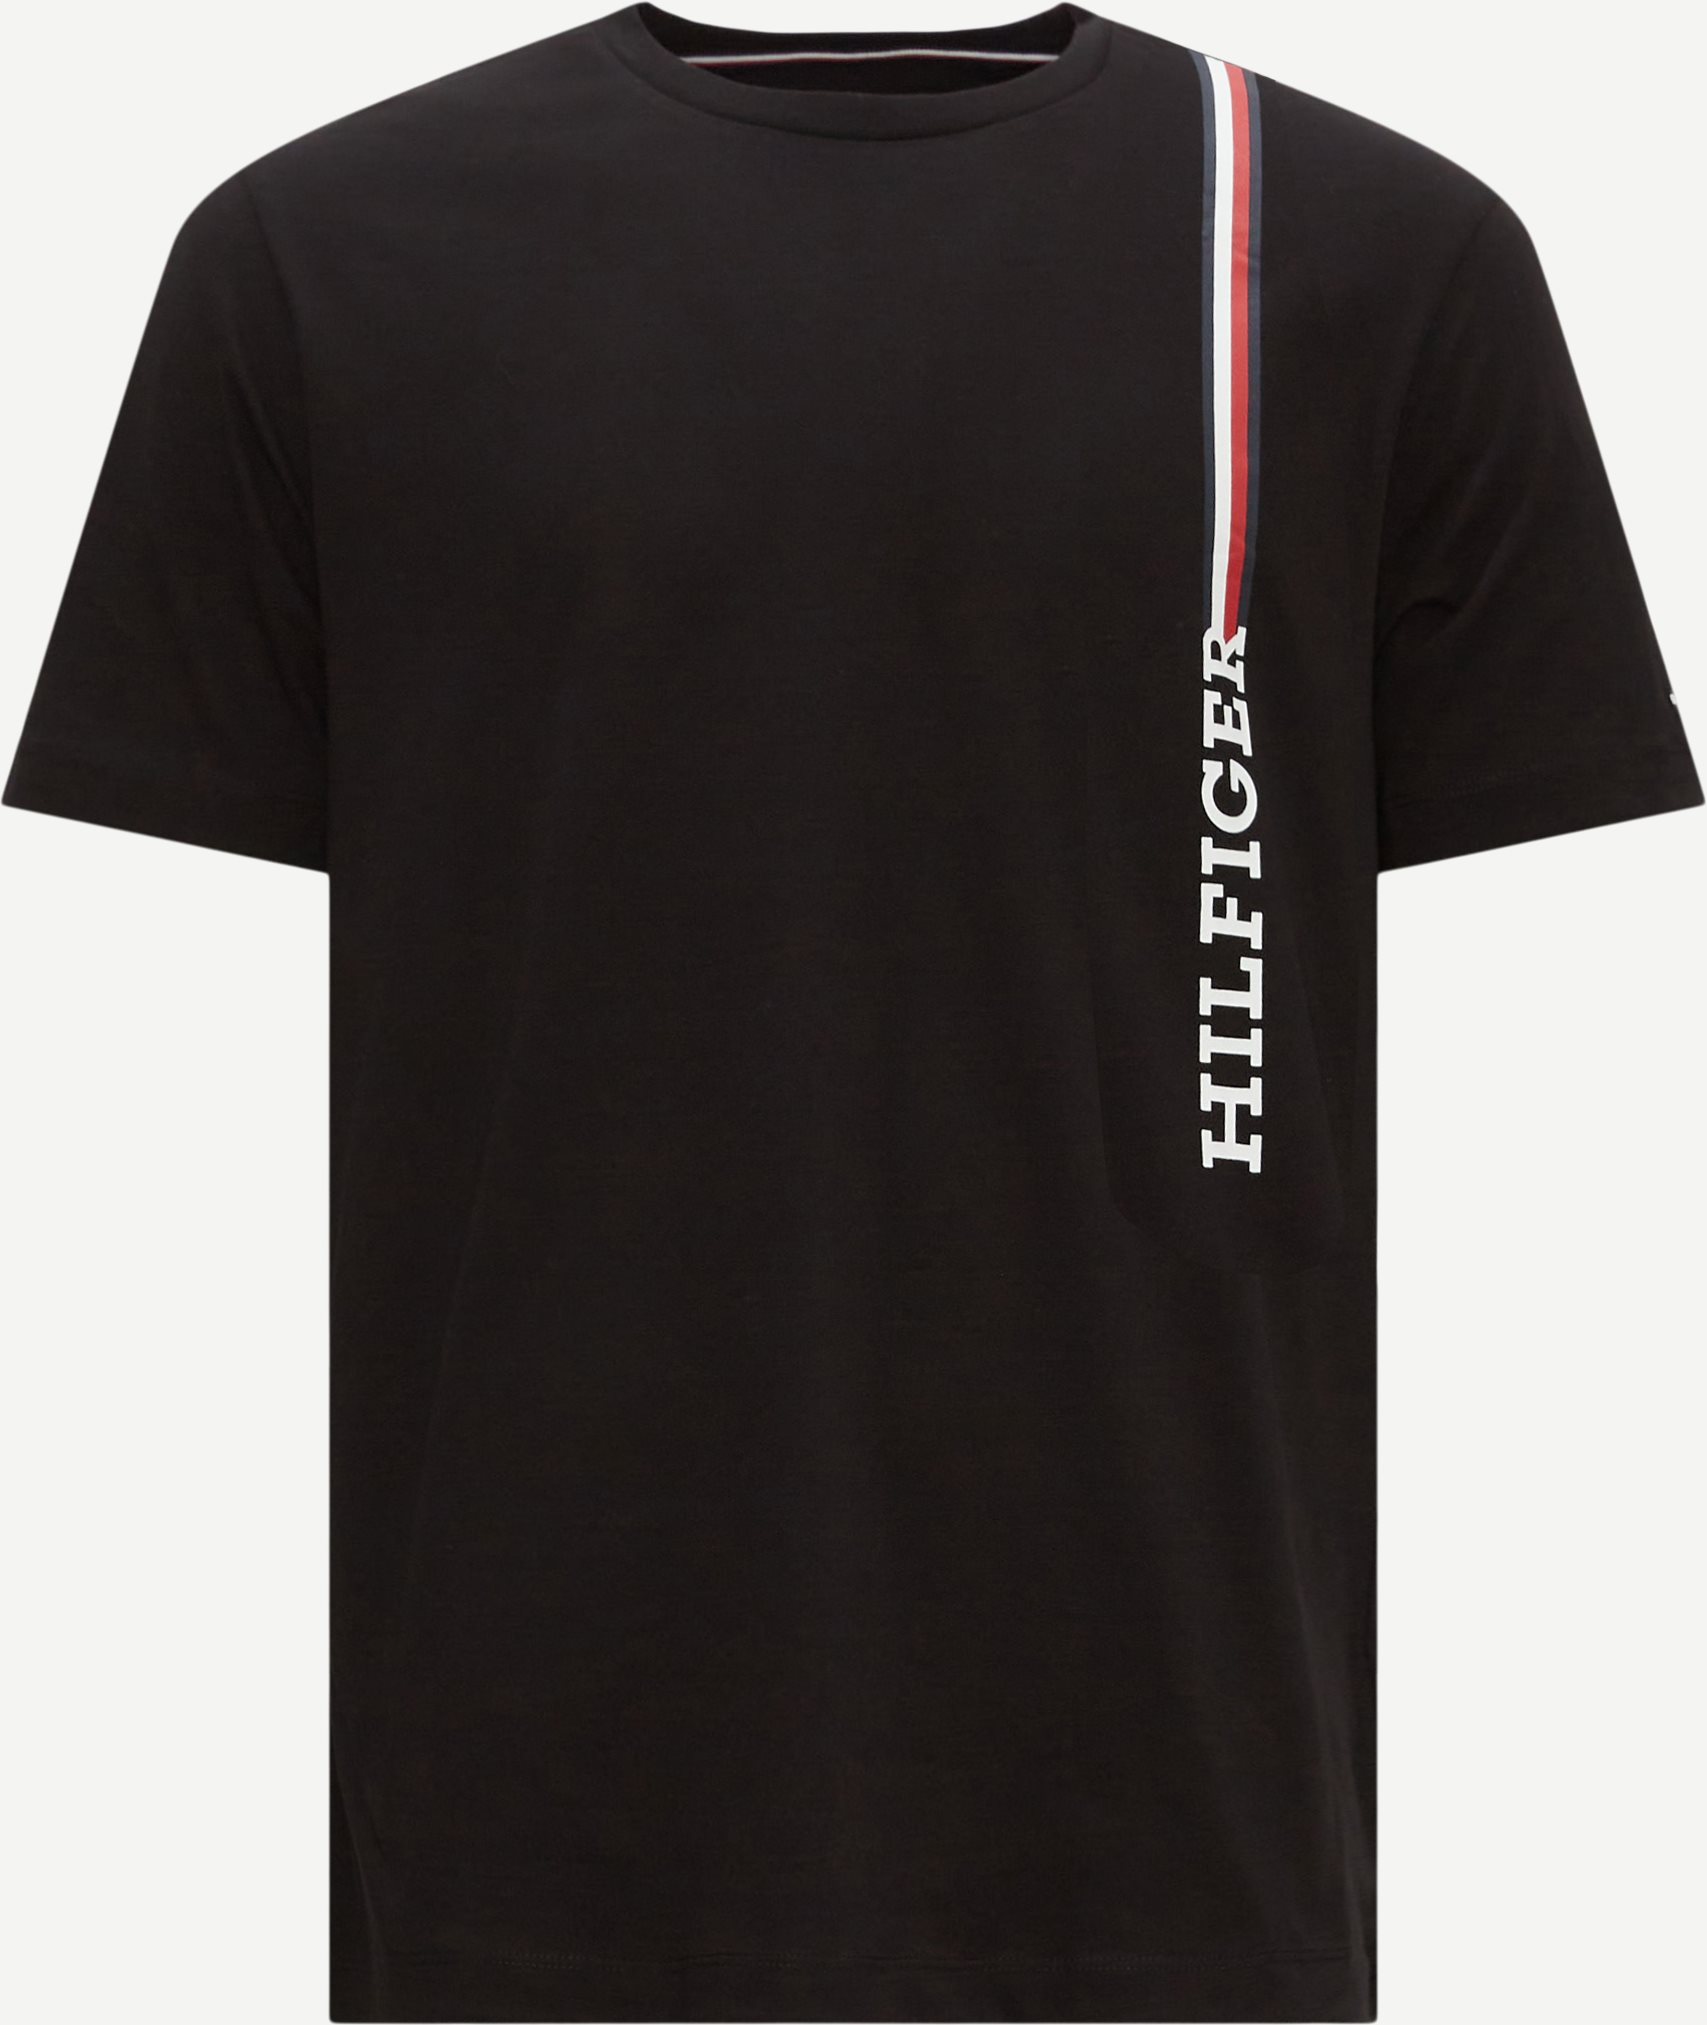 Tommy Hilfiger T-shirts 32118 RWB MONOTYPE VERTICAL STR Black